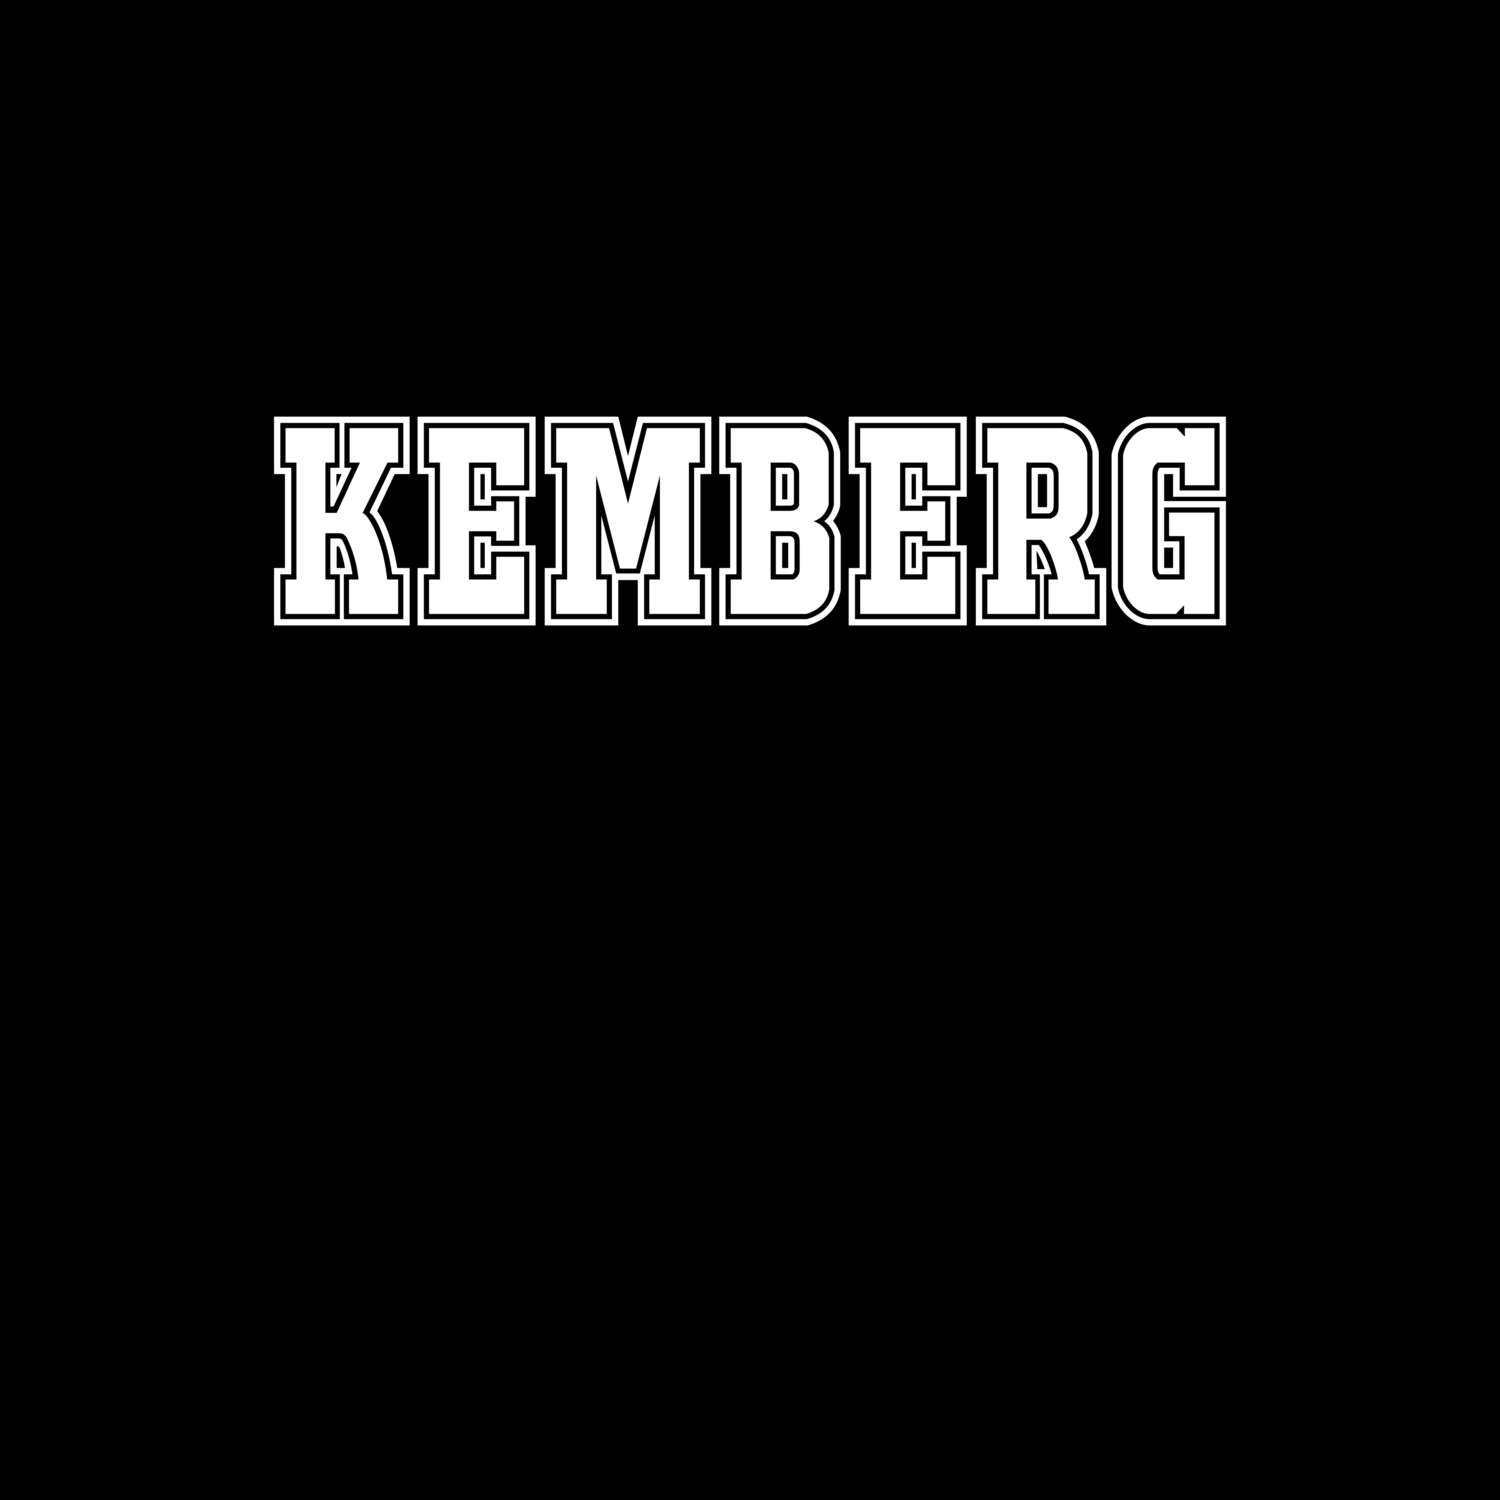 Kemberg T-Shirt »Classic«